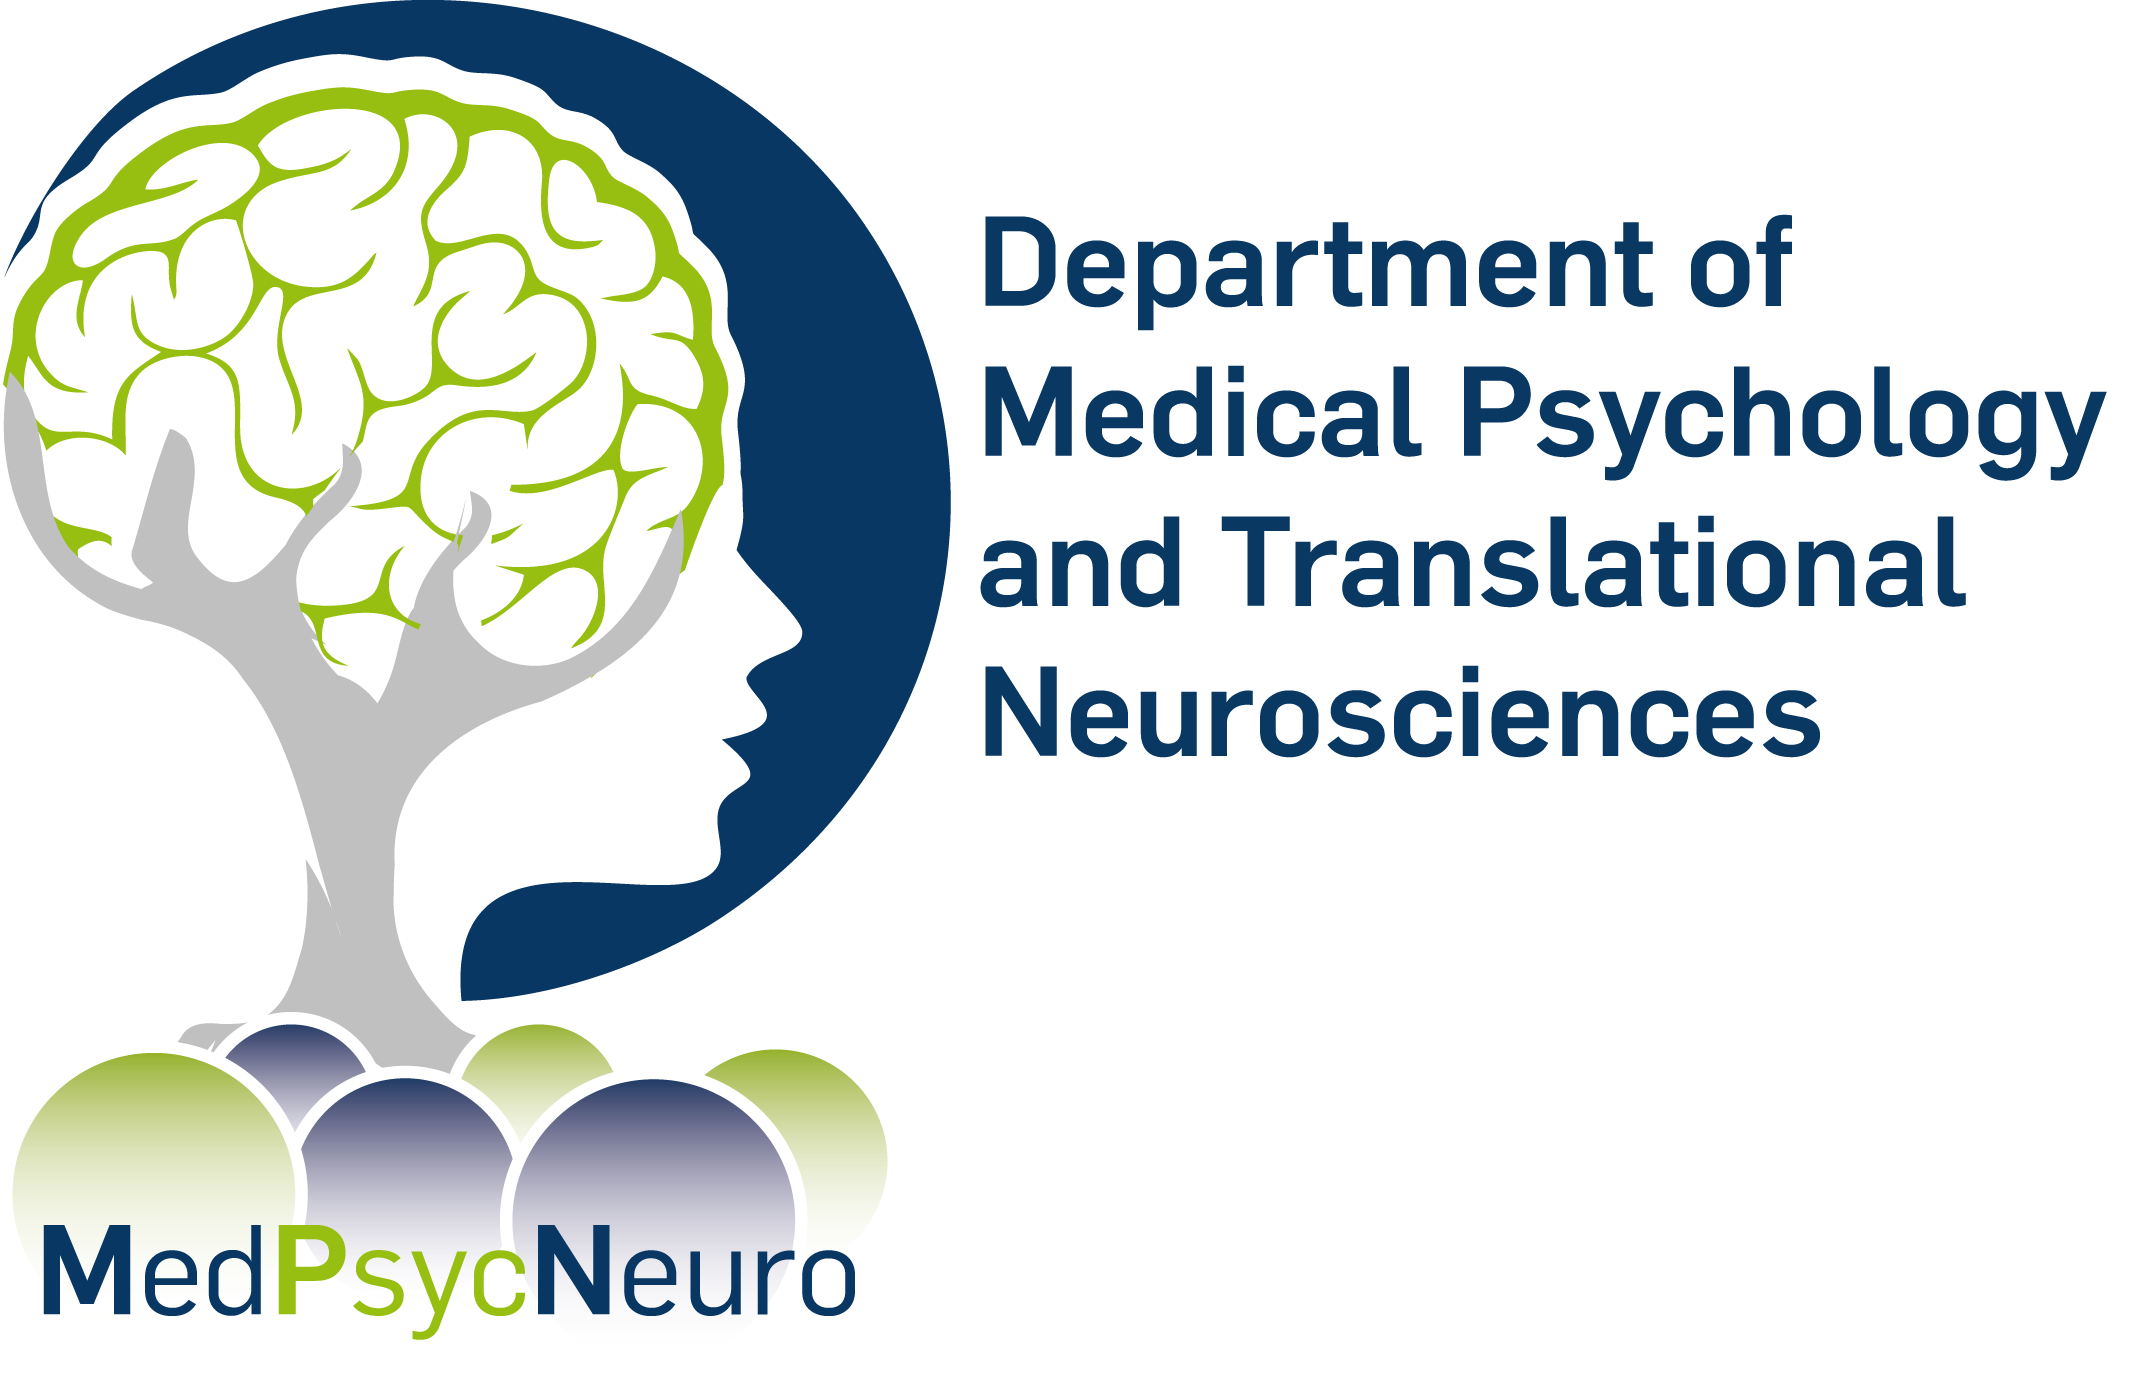 Logo Medical Psychology and Medical Sociology